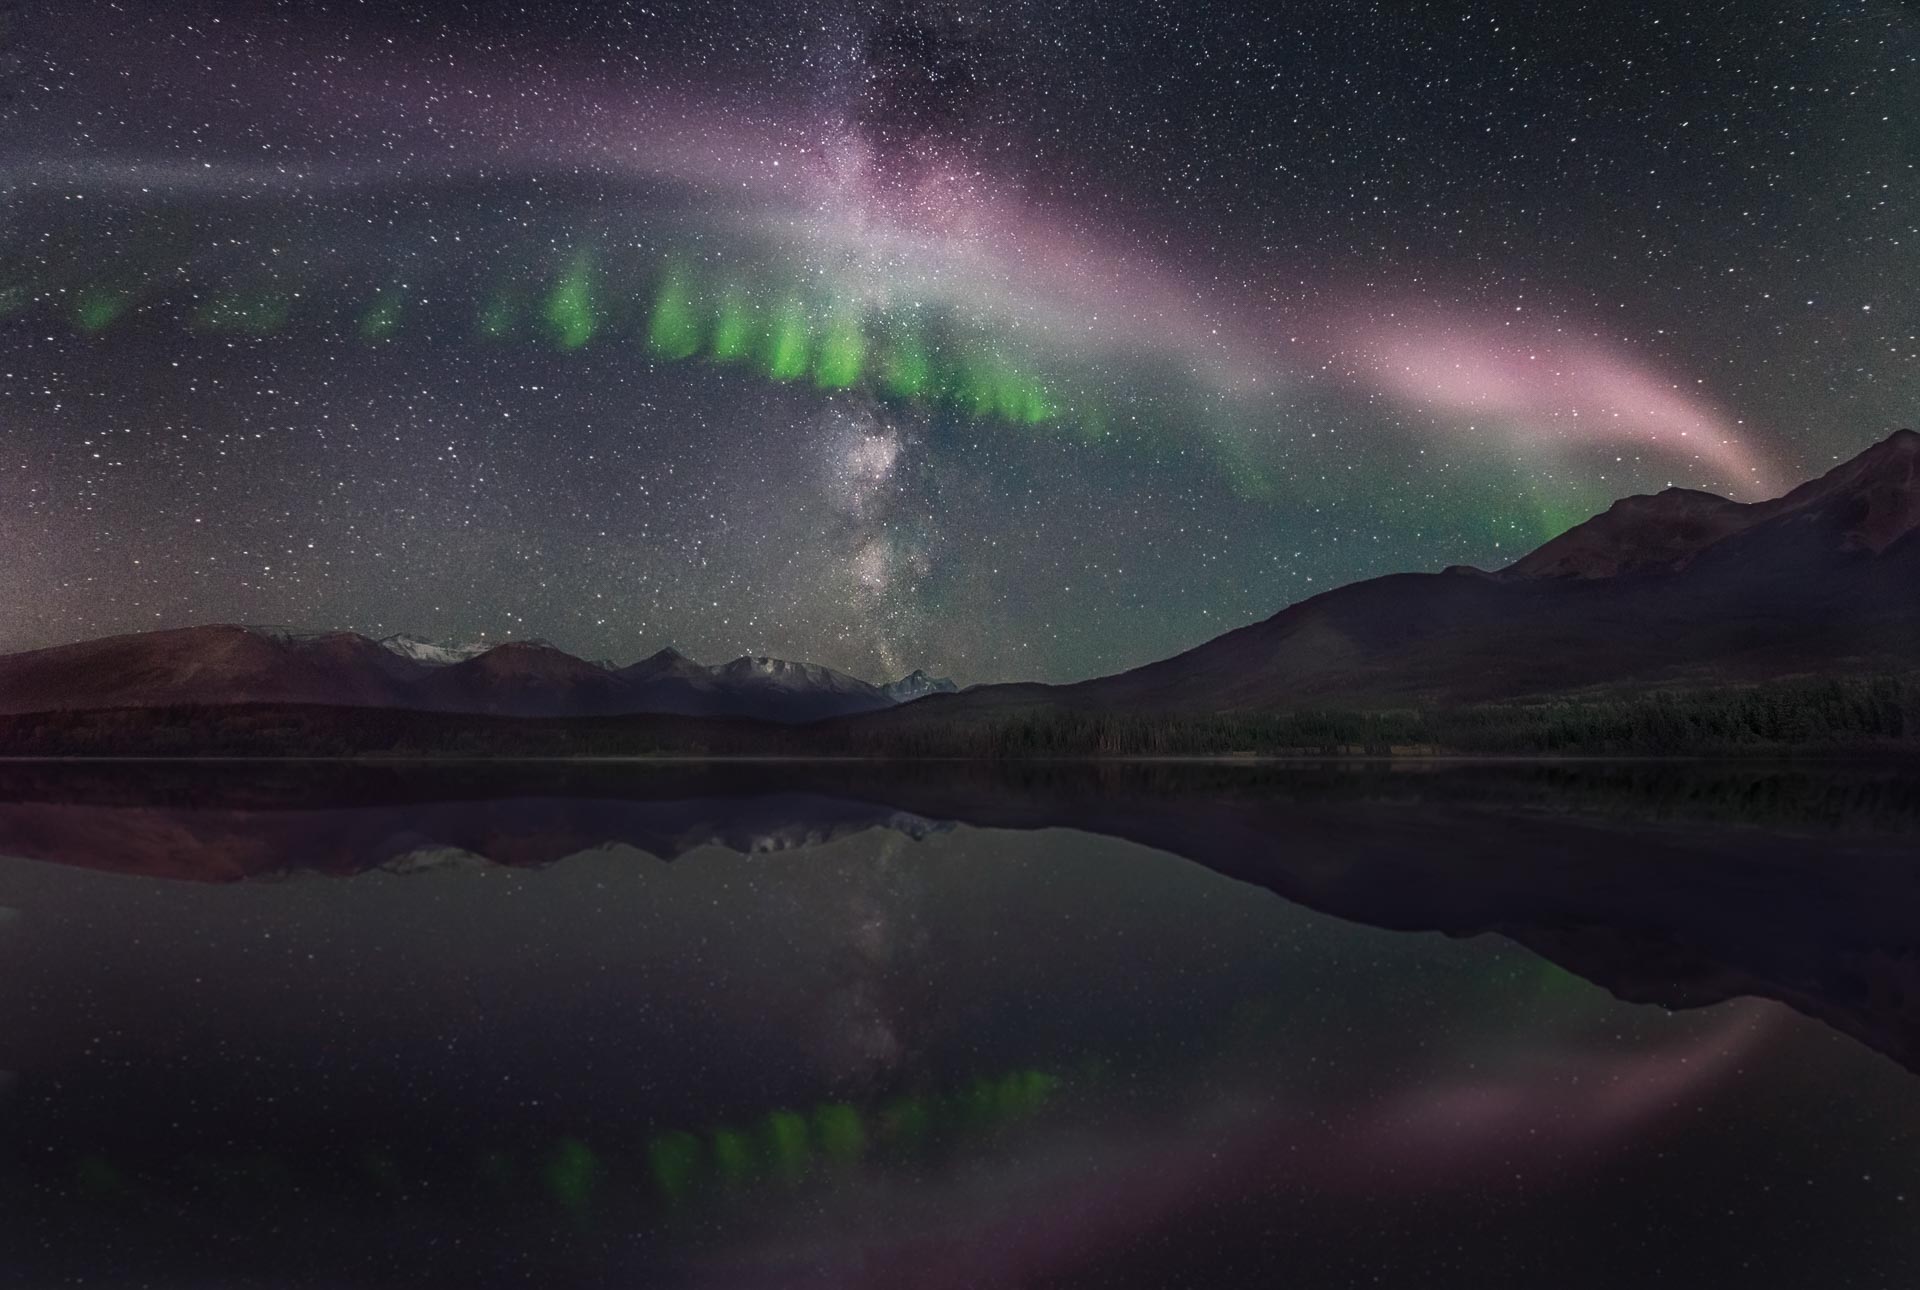 aurora boreal steve canada alberta noche via lactea